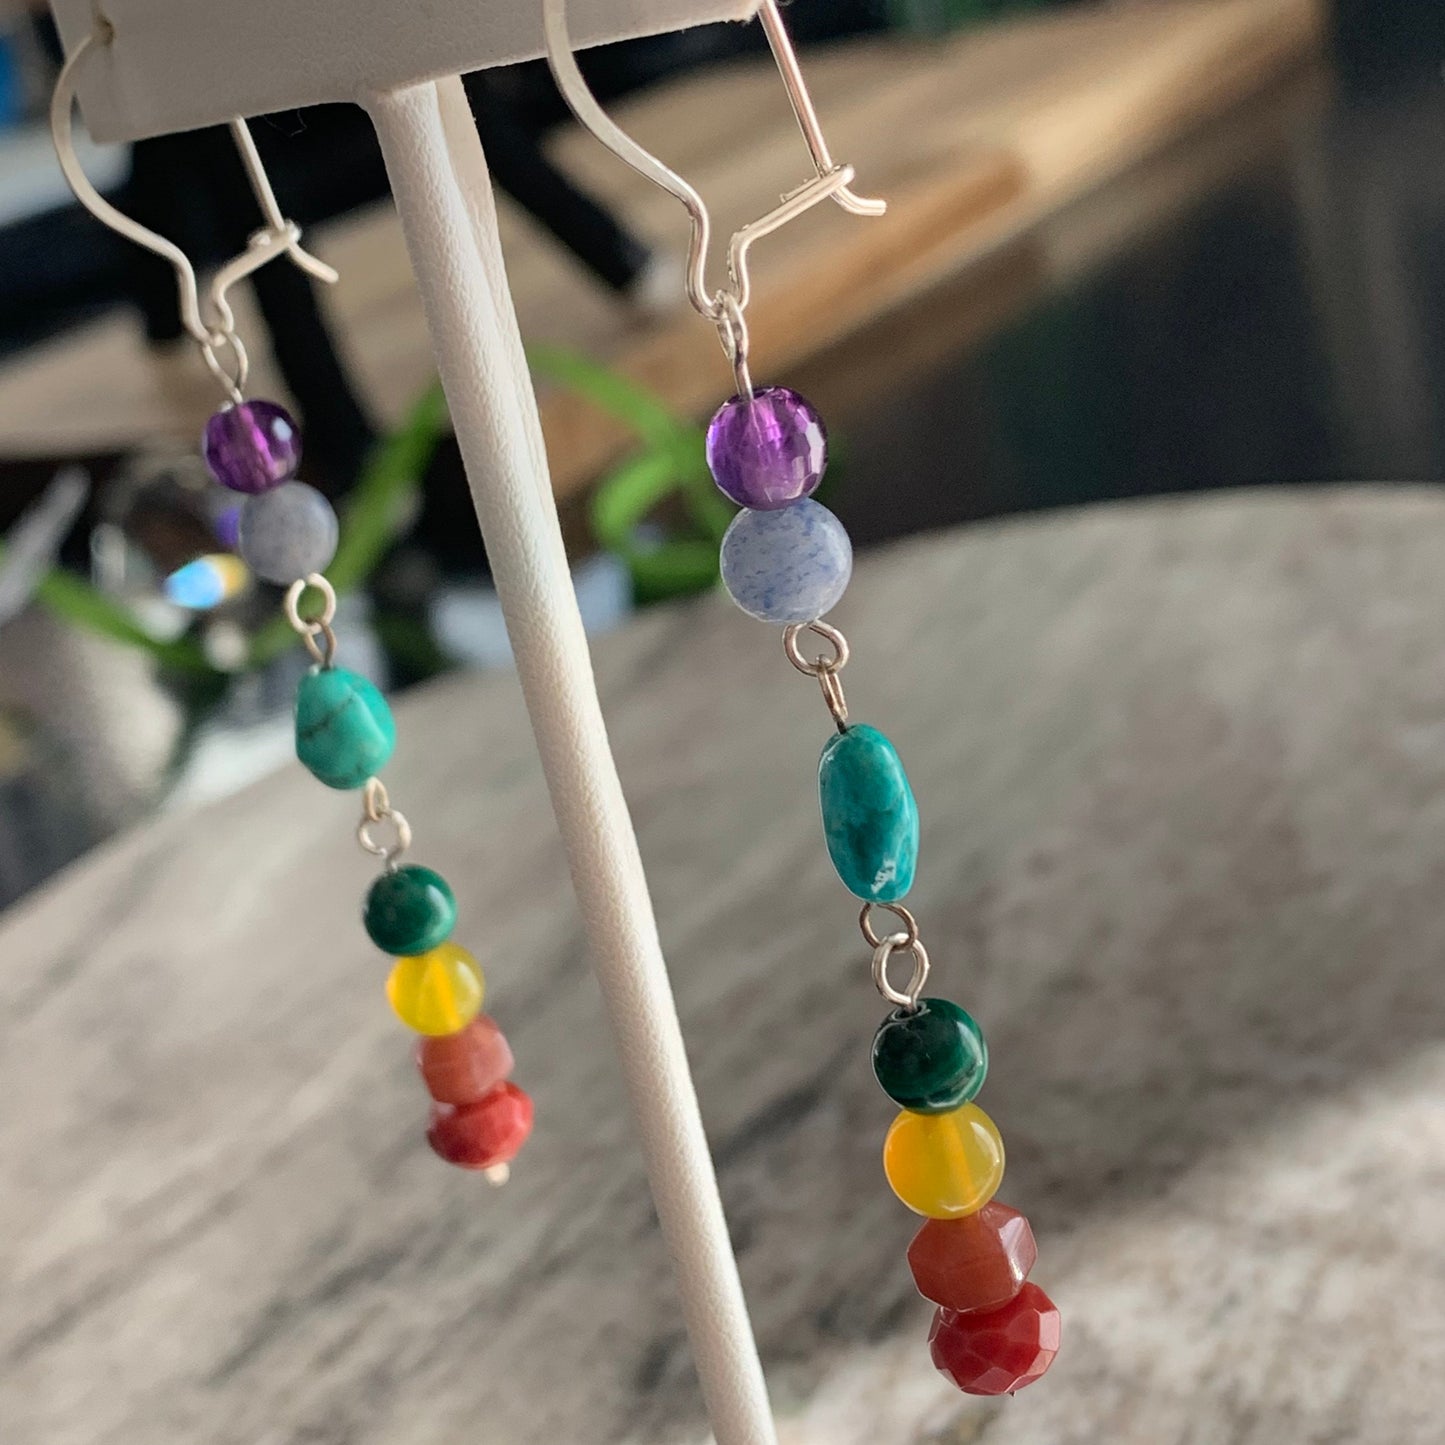 Rainbow chakra earrings - gemstone beaded dangle earrings with sterling ear wires - amethyst, malachite, turquoise - handmade jewelry